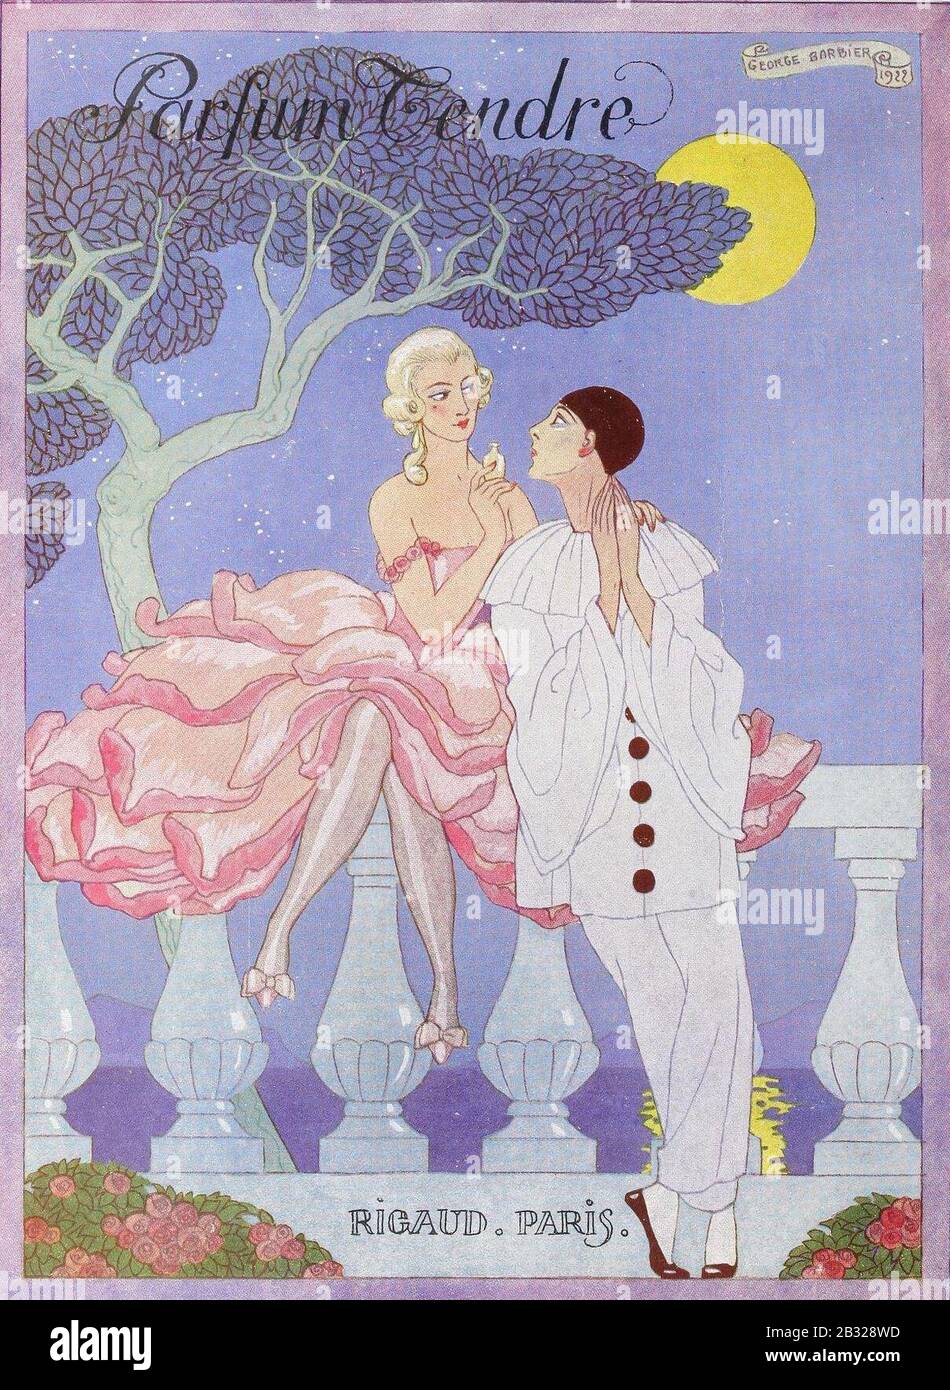 George Barbier - Parfum Tendre (Parfums Rigaud), 1922. Stockfoto